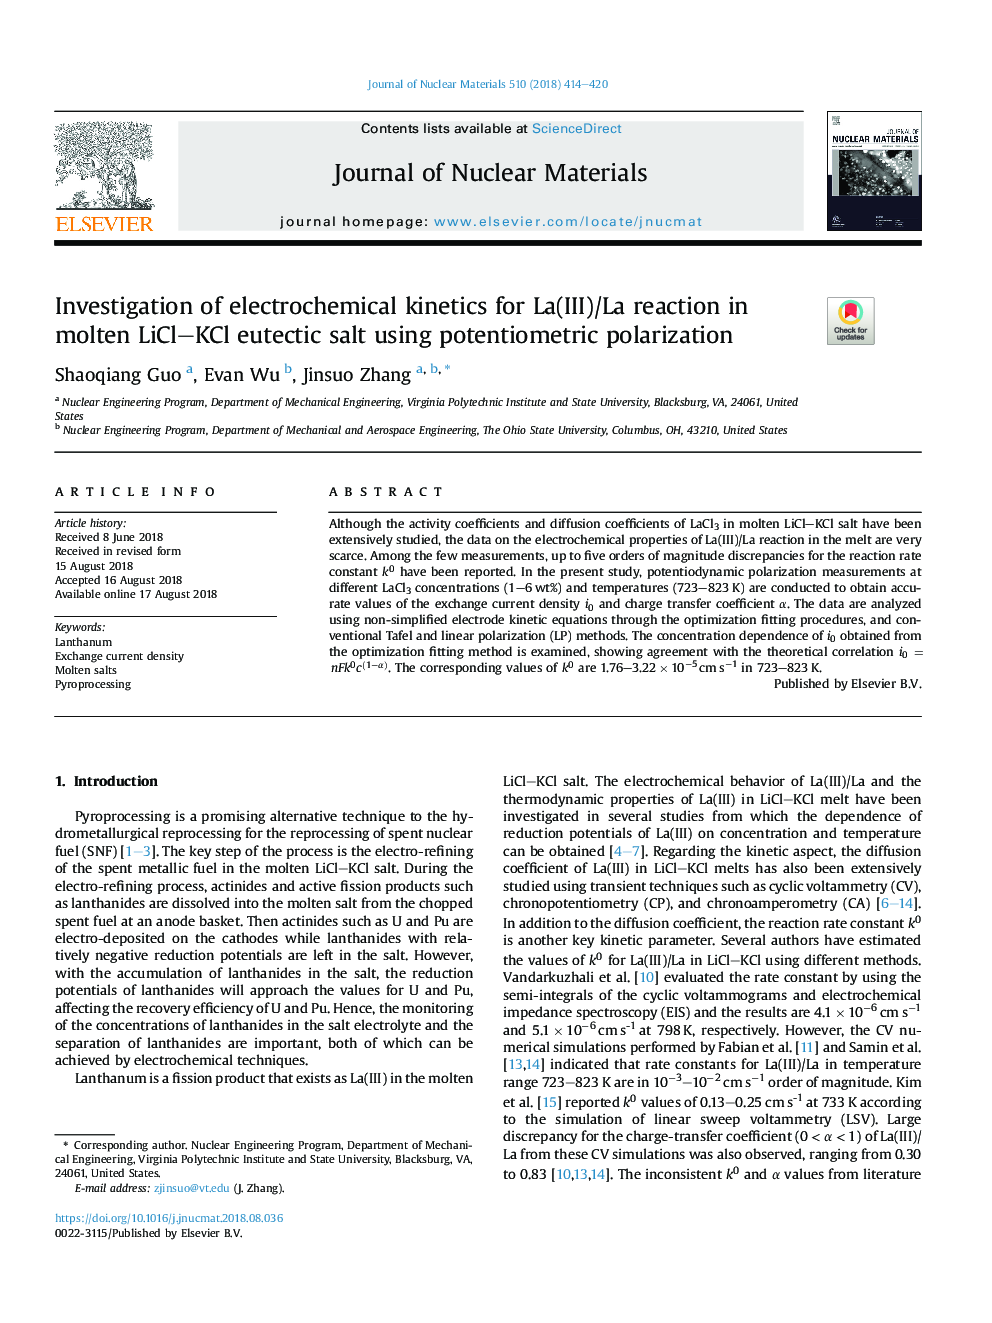 Investigation of electrochemical kinetics for La(III)/La reaction in molten LiClKCl eutectic salt using potentiometric polarization